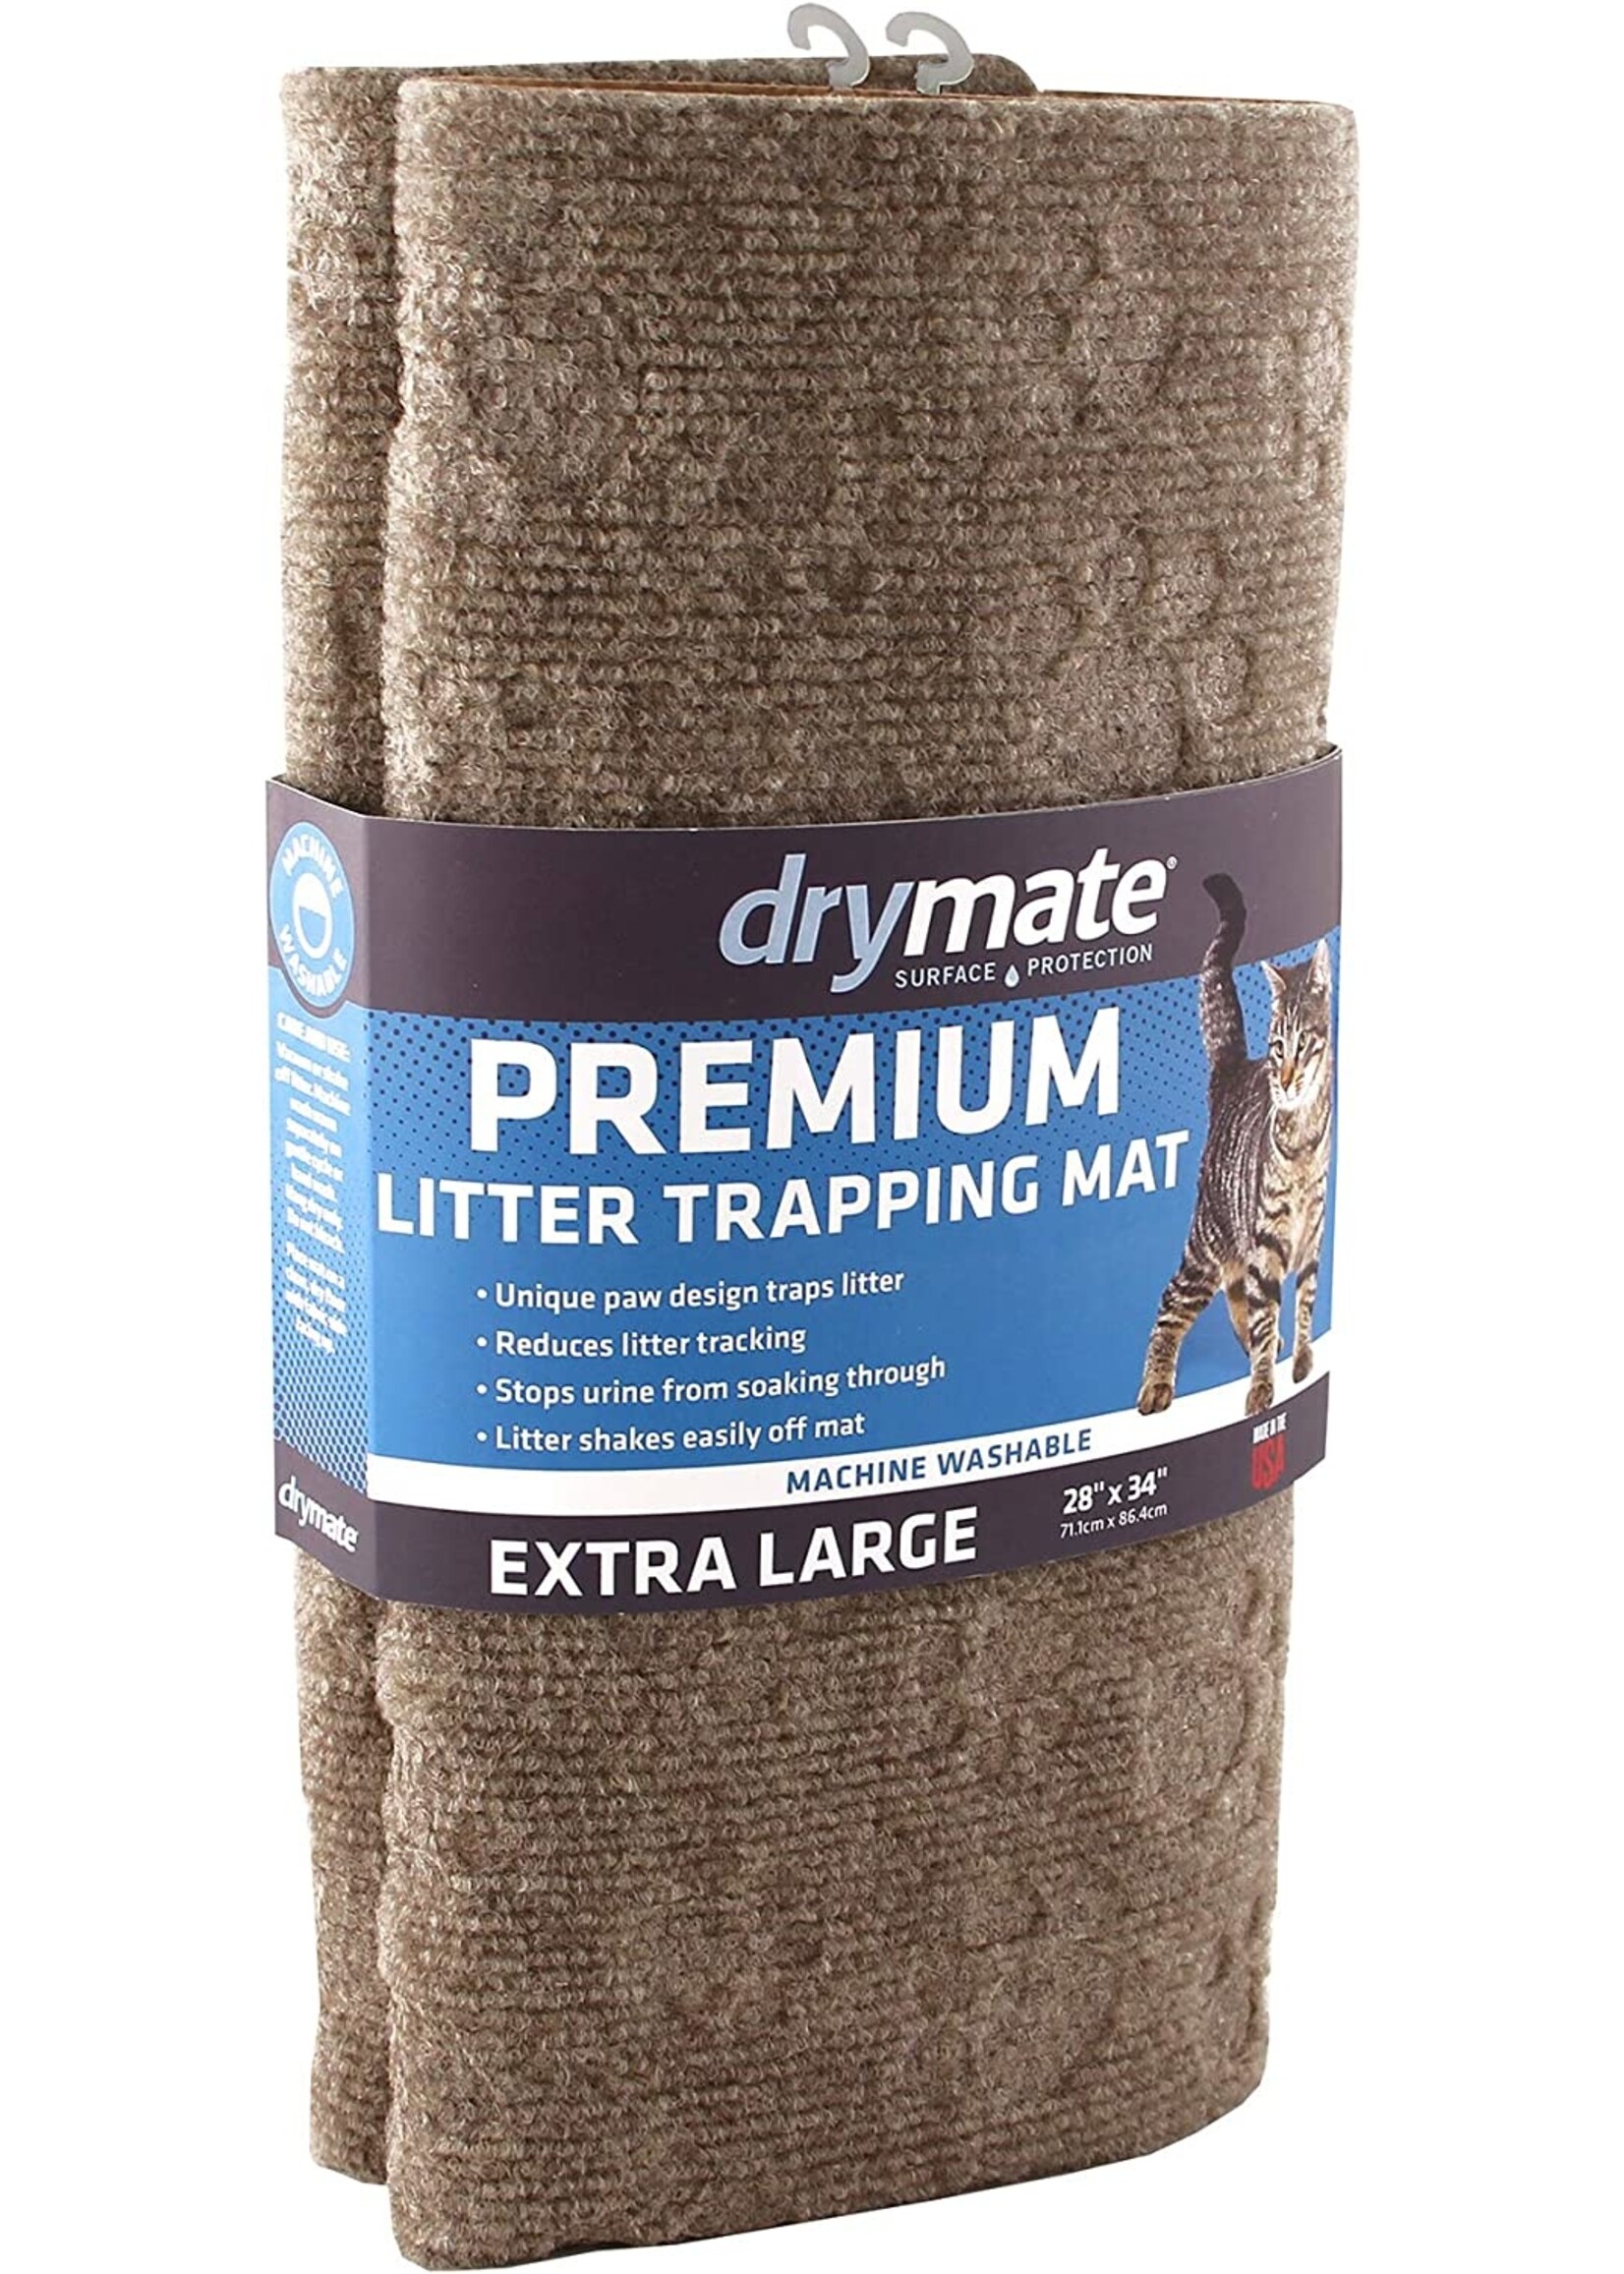 Drymate Drymate Cat Litter Trapping Mat Paw Tan 28 x 34"